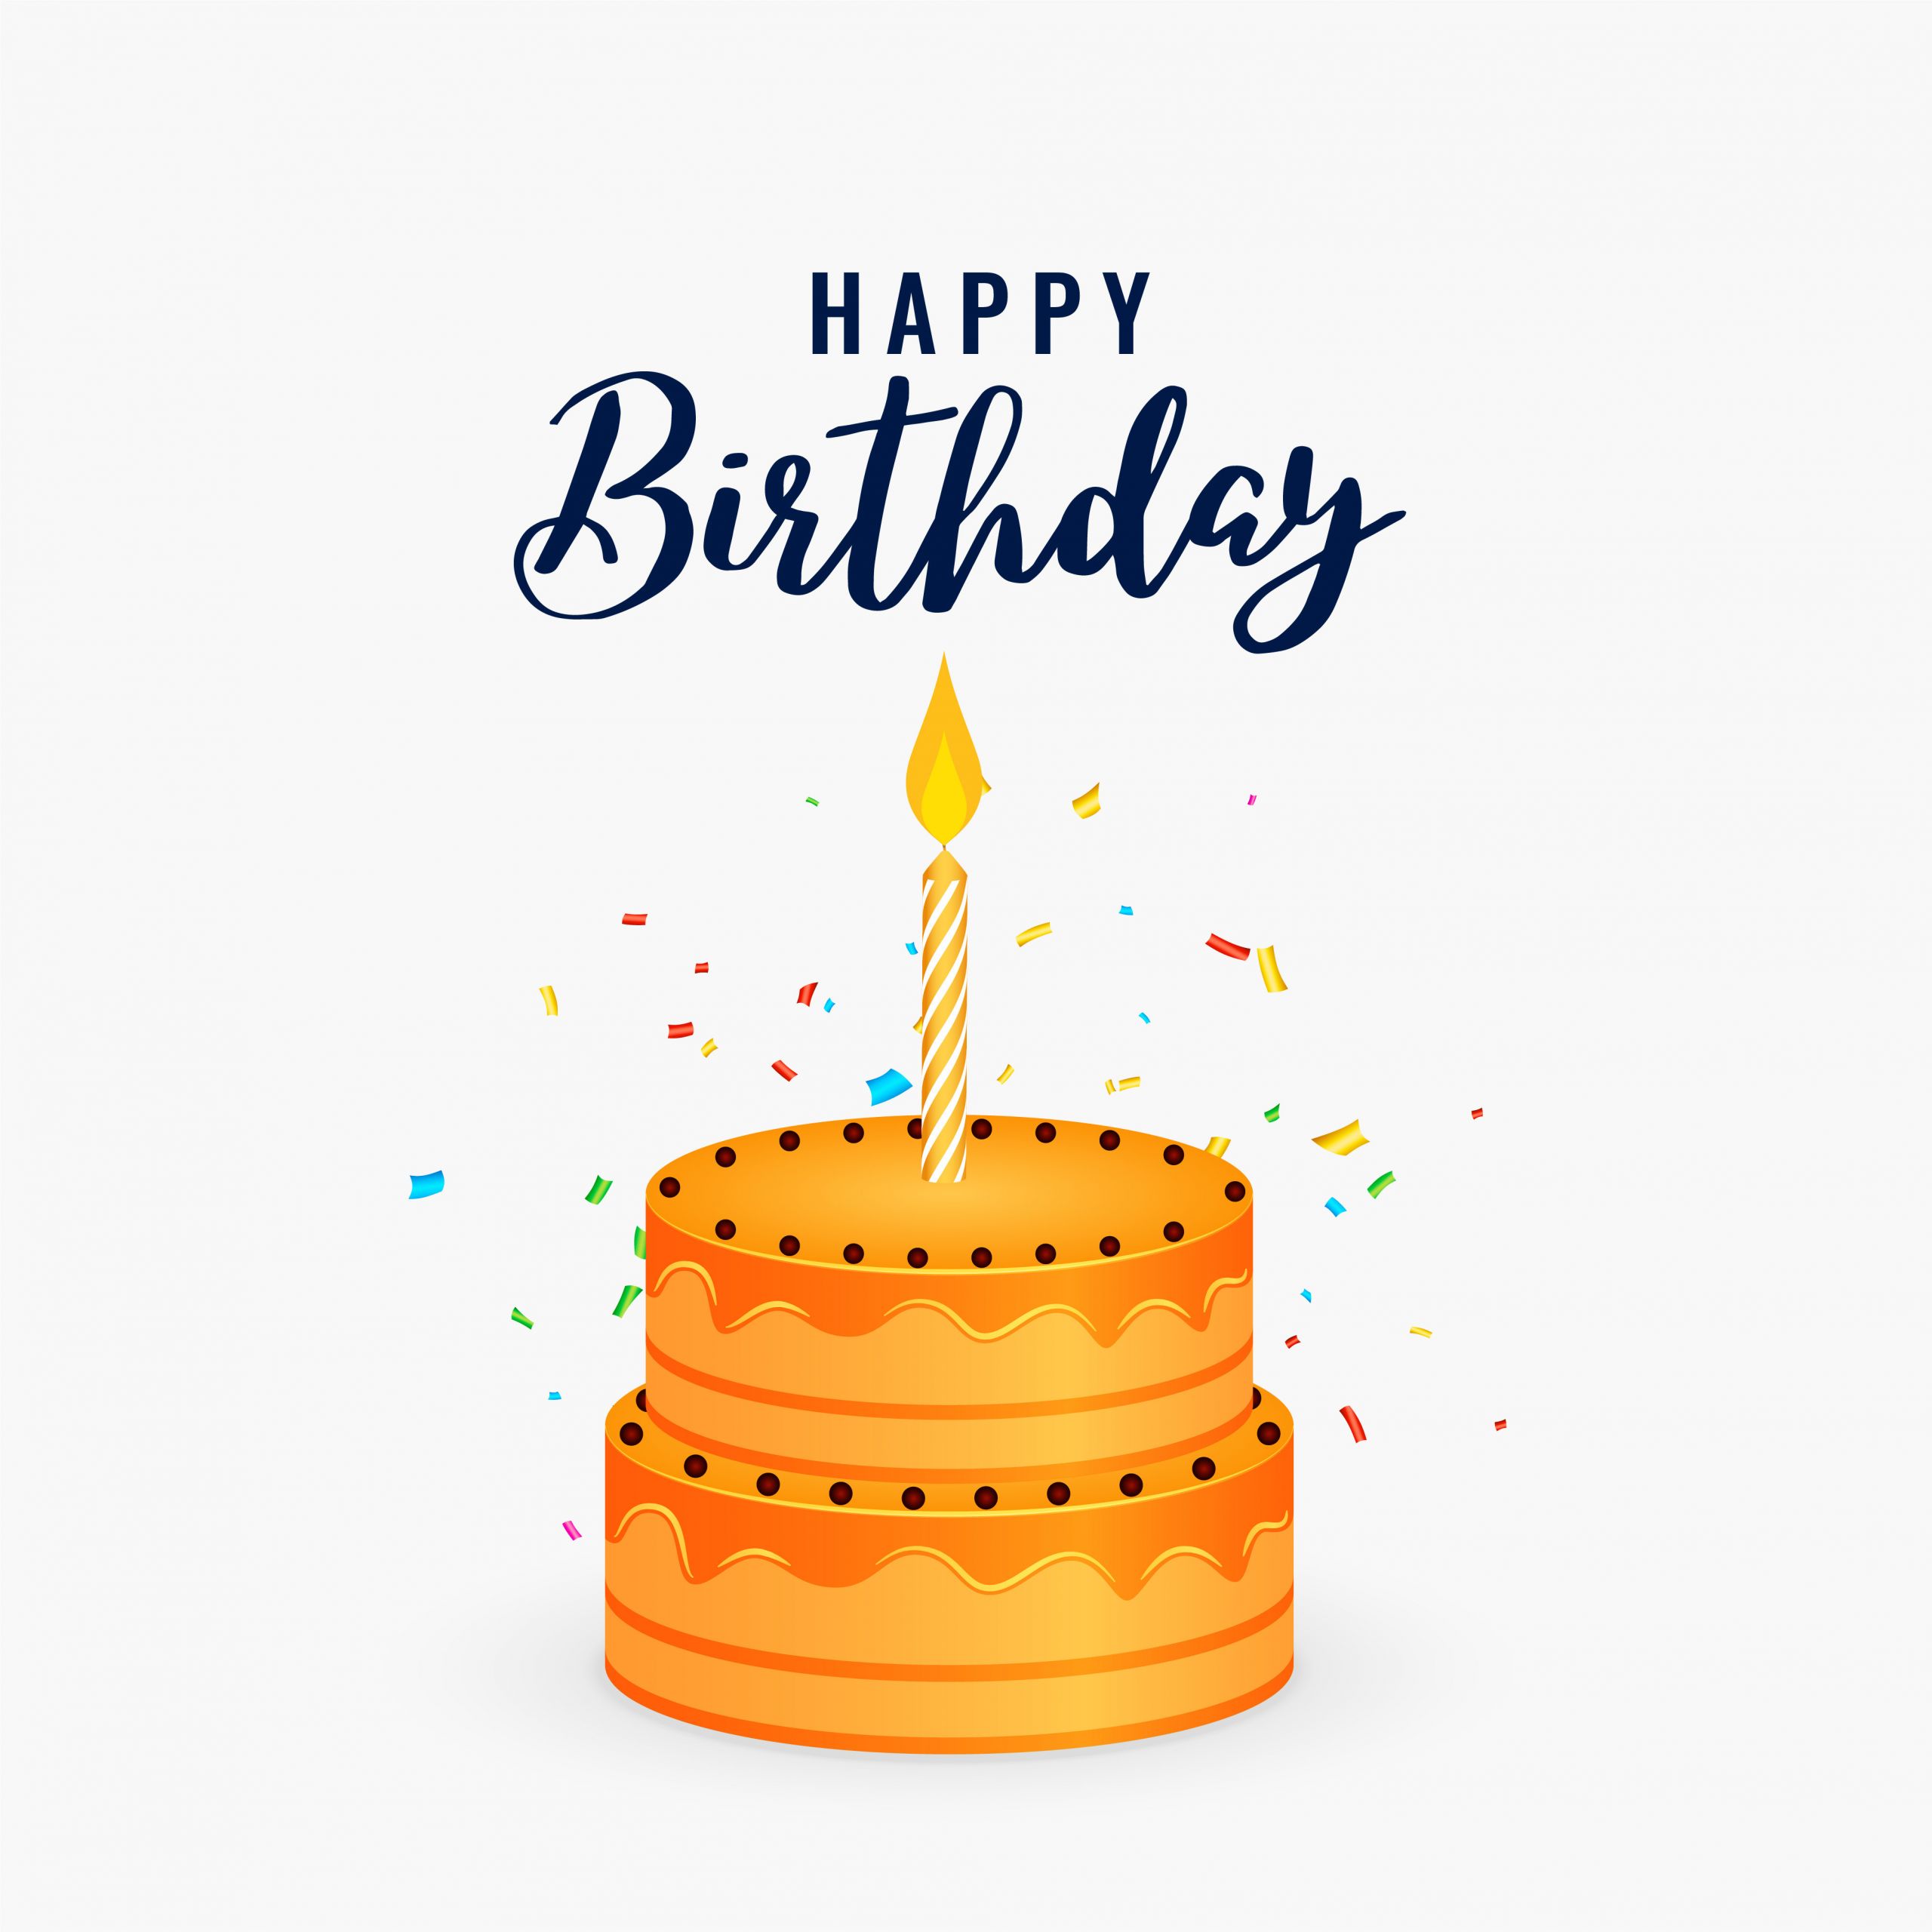 Birthday Cake Vector
 Birthday Cake Vectors 2833 Free Downloads